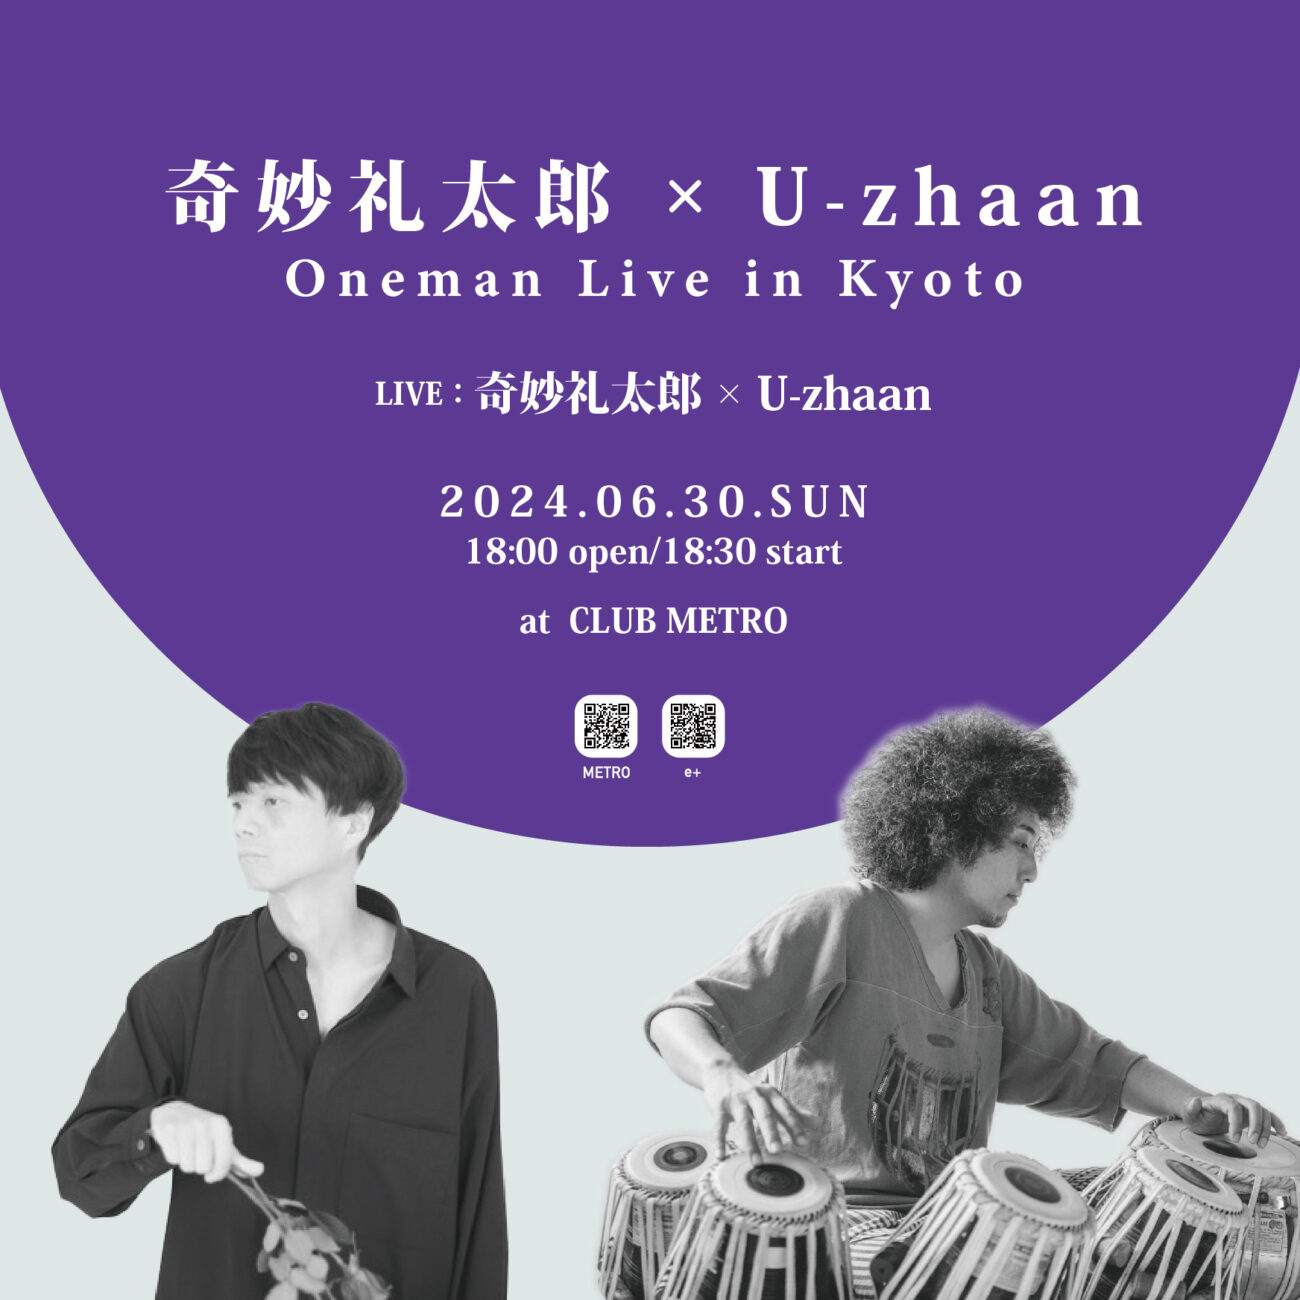 奇妙礼太郎 × U-zhaan Oneman Live in Kyoto at Club Metro, Kansai